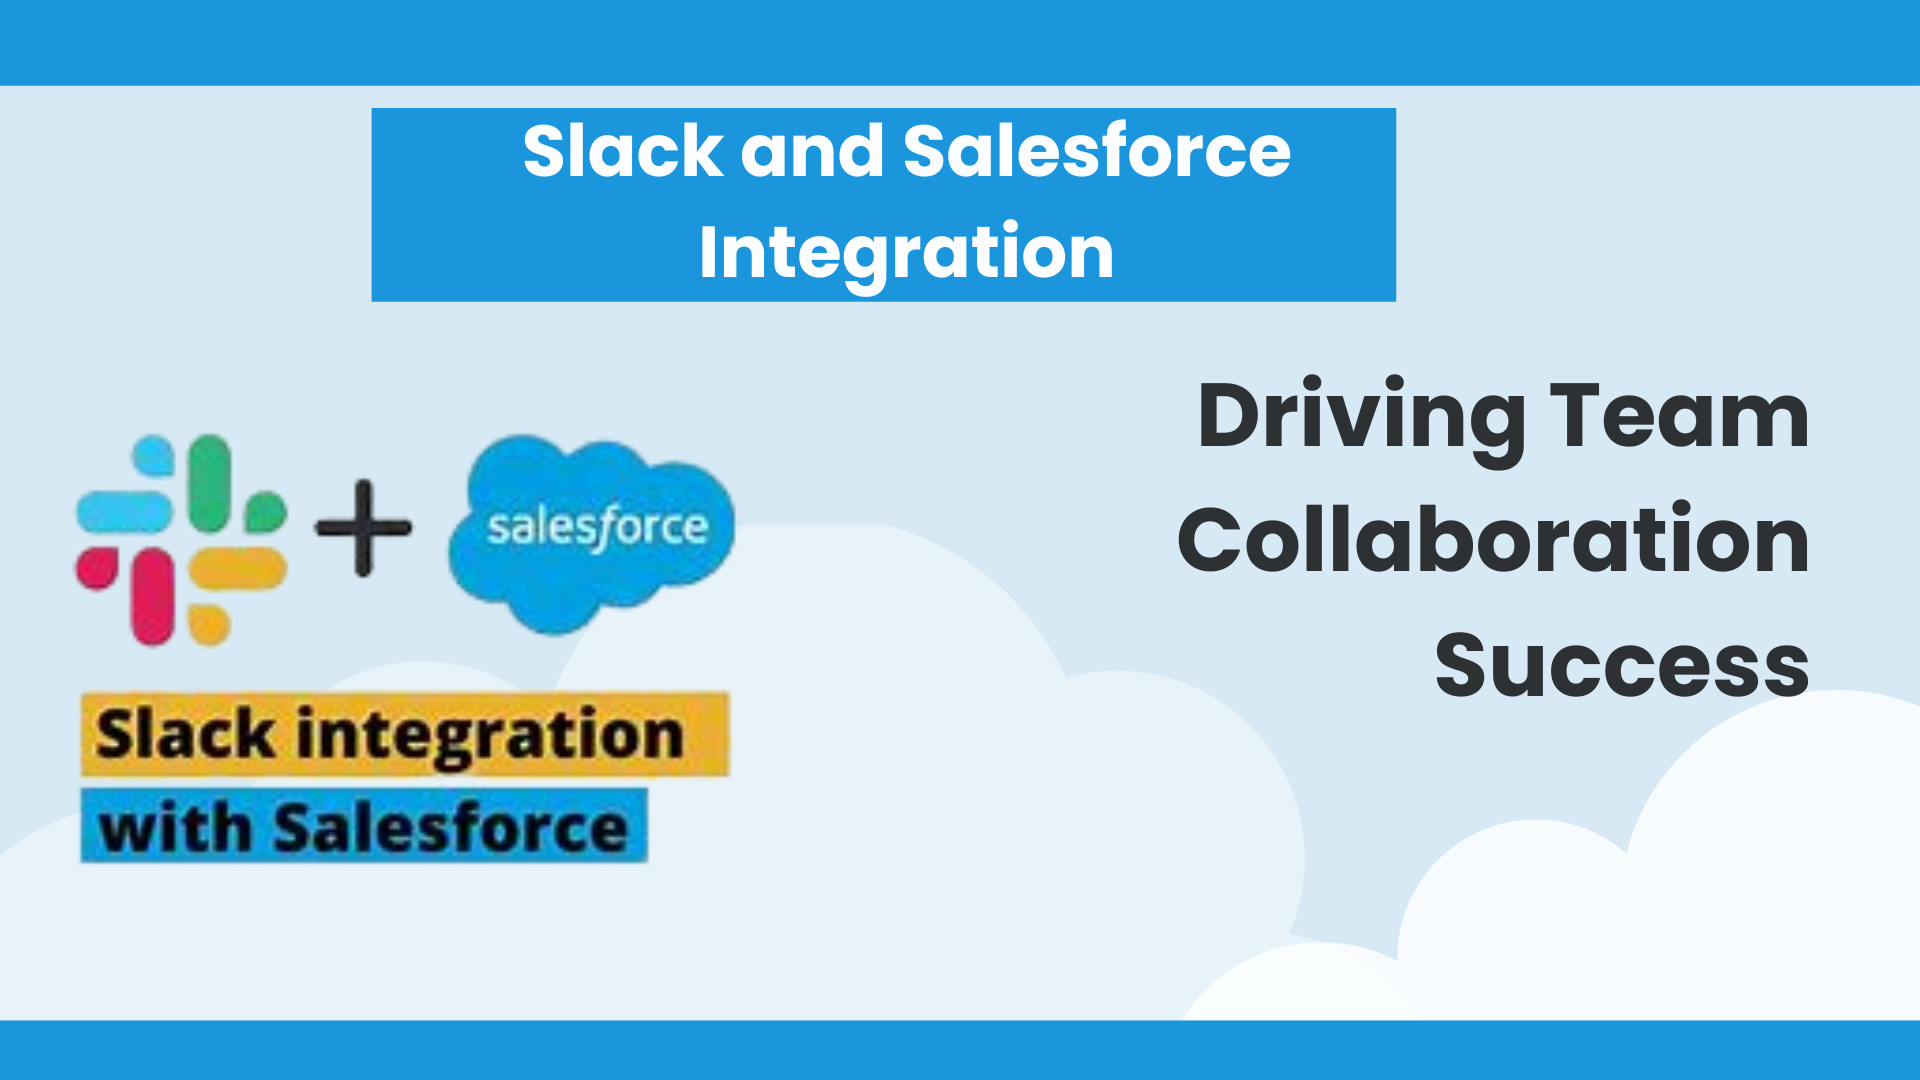 Slack and Salesforce Integration: Driving Team Collaboration Success